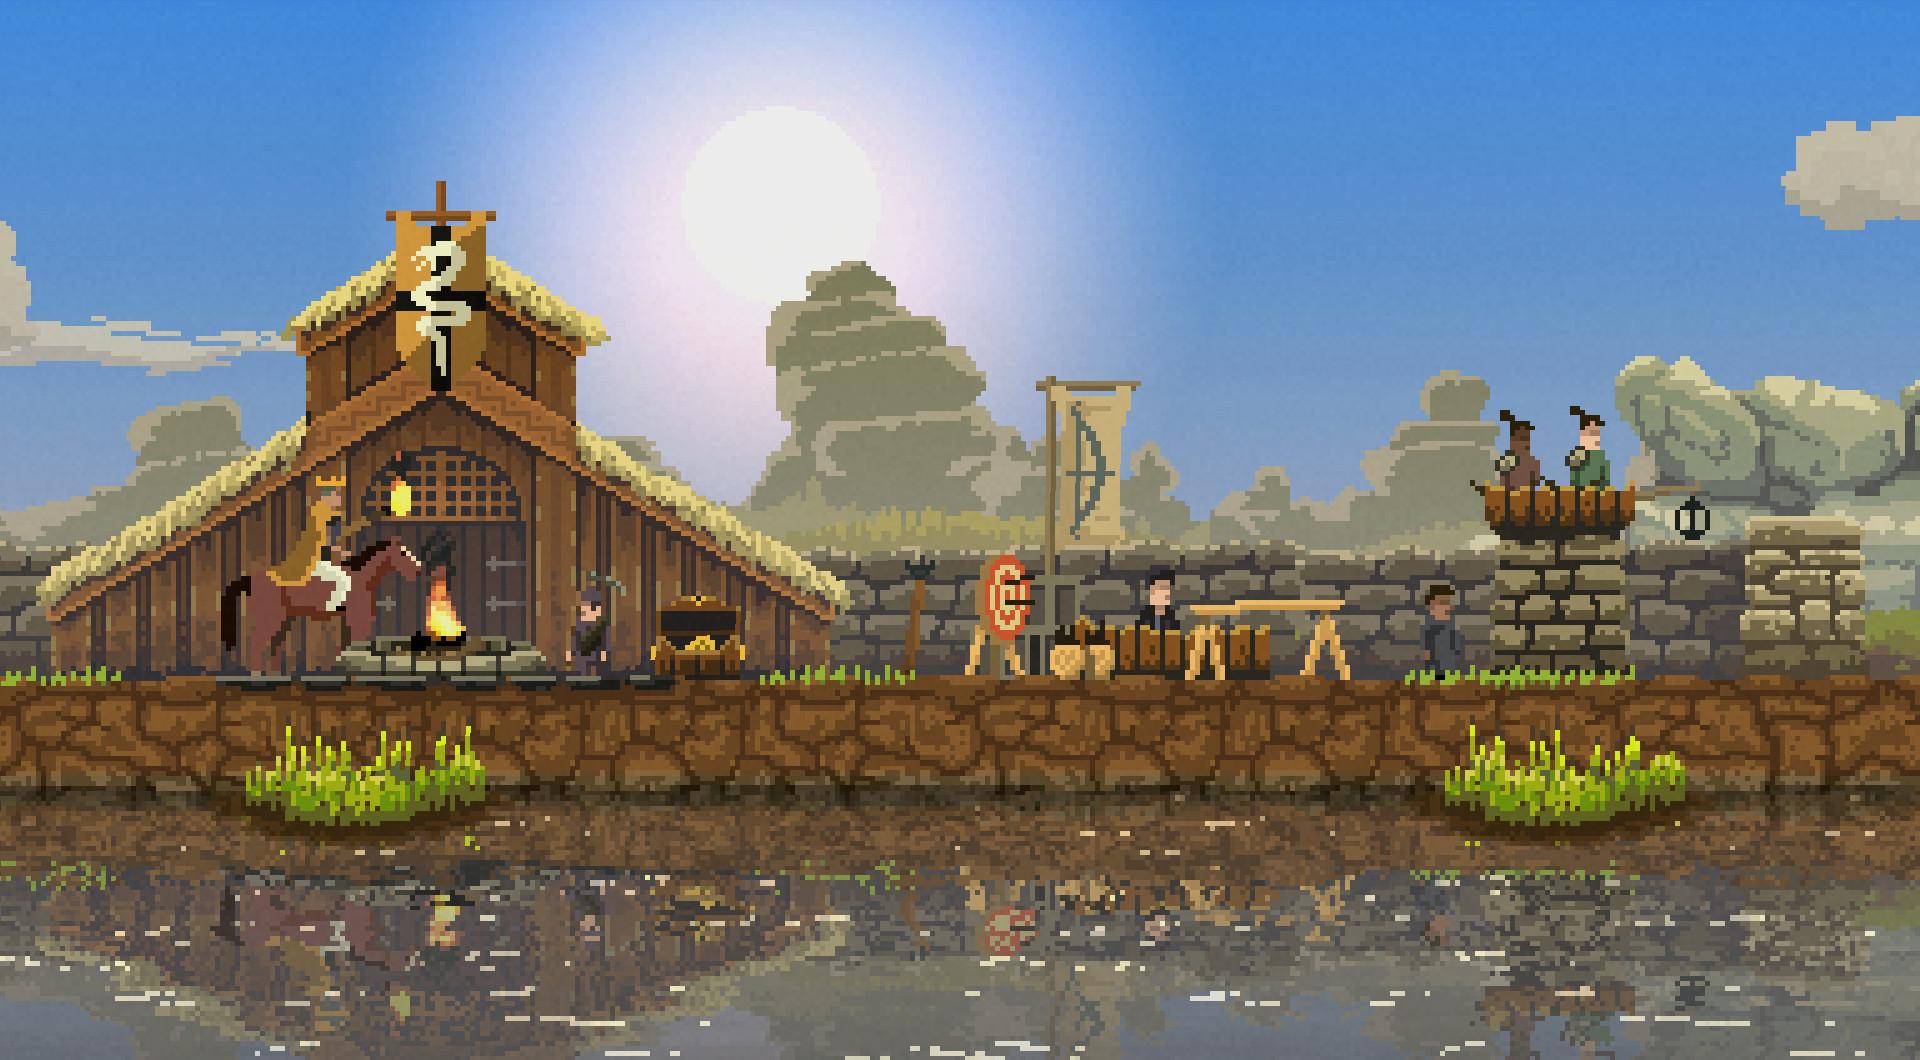 Screenshot №8 from game Kingdom: Classic